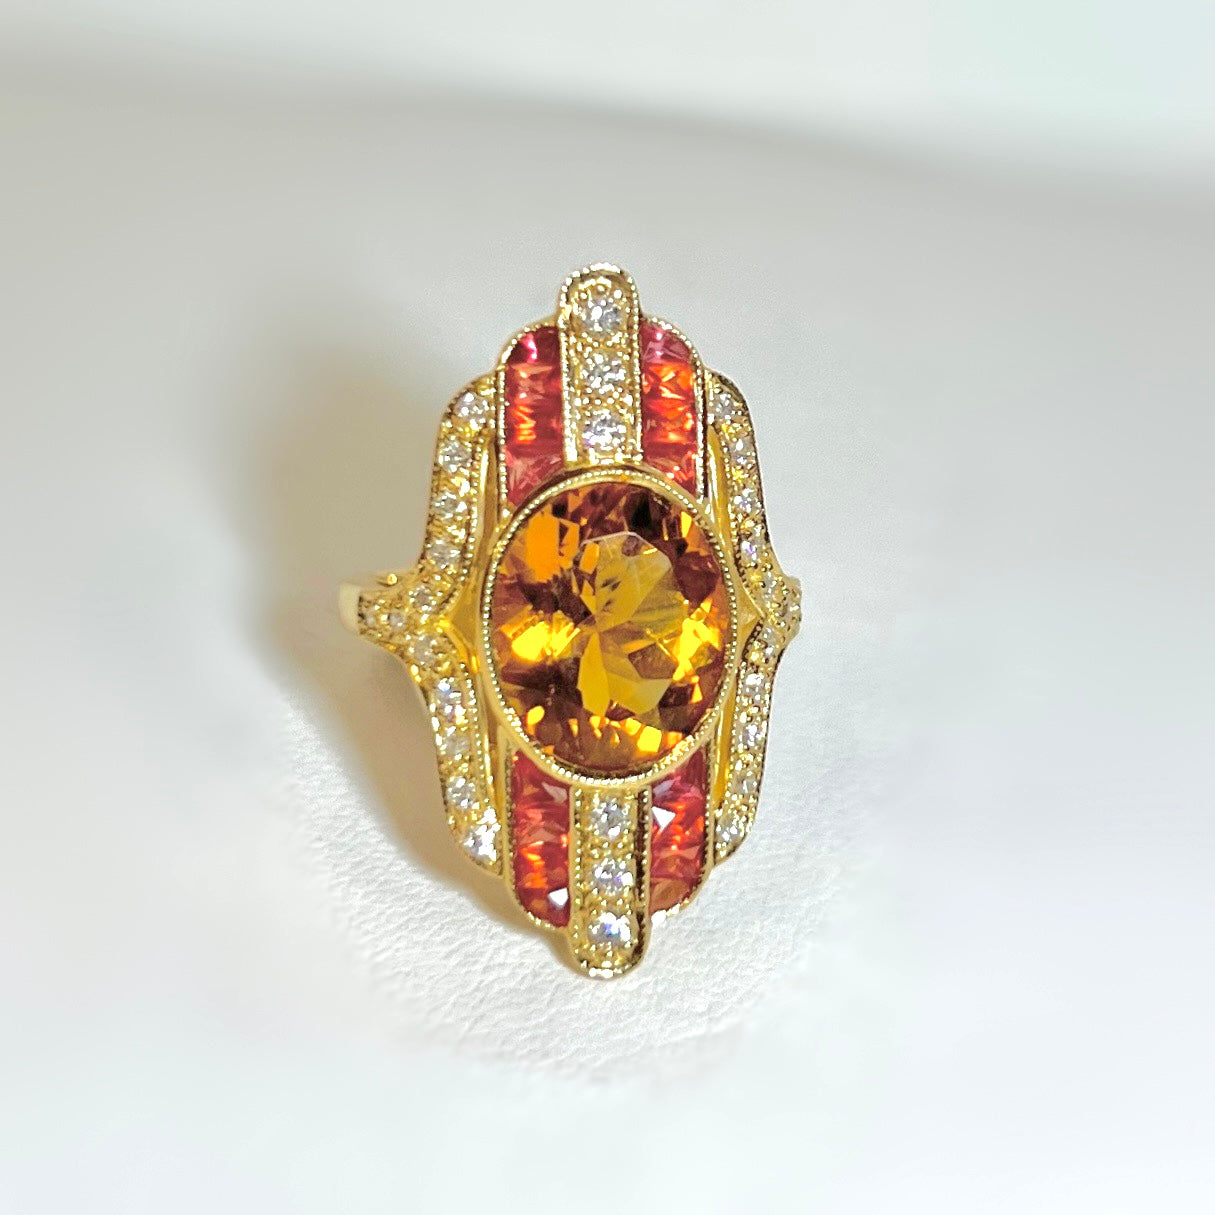 18ct Yellow Gold Citrine, orange Sapphire & Diamond Cocktail Ring - Size M 1/2